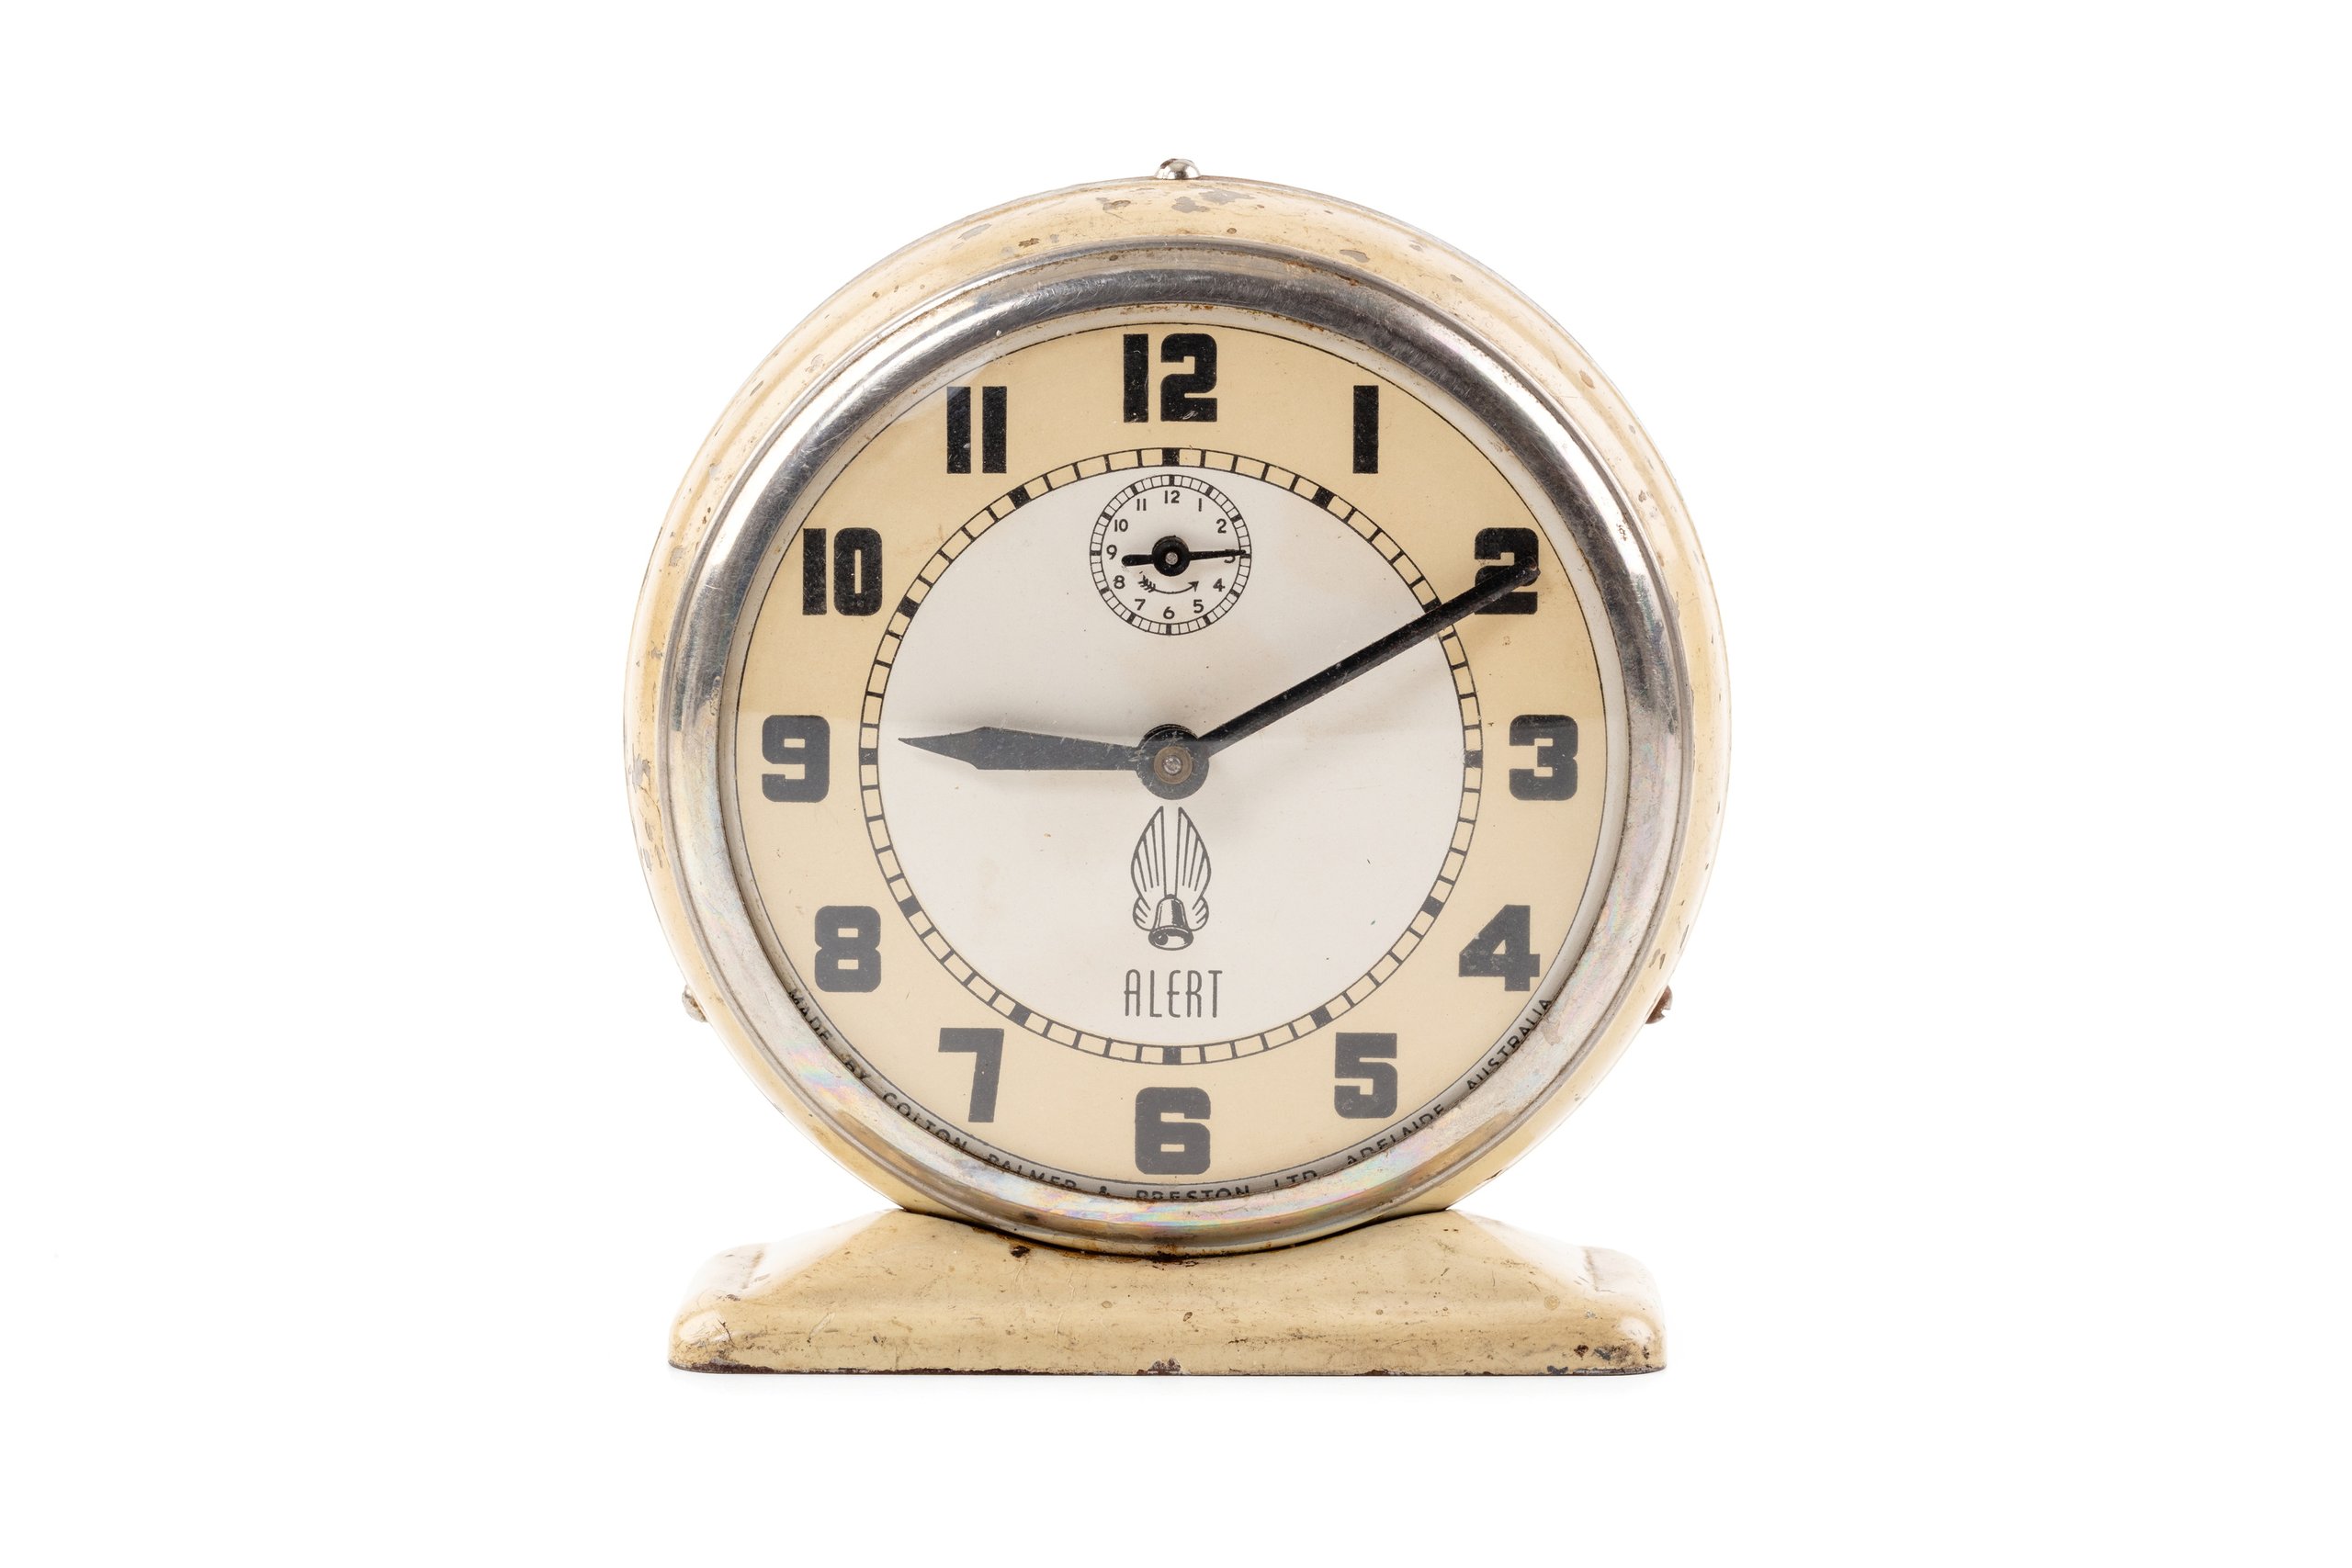 'Alert' alarm clock by Colton, Palmer and Preston Ltd